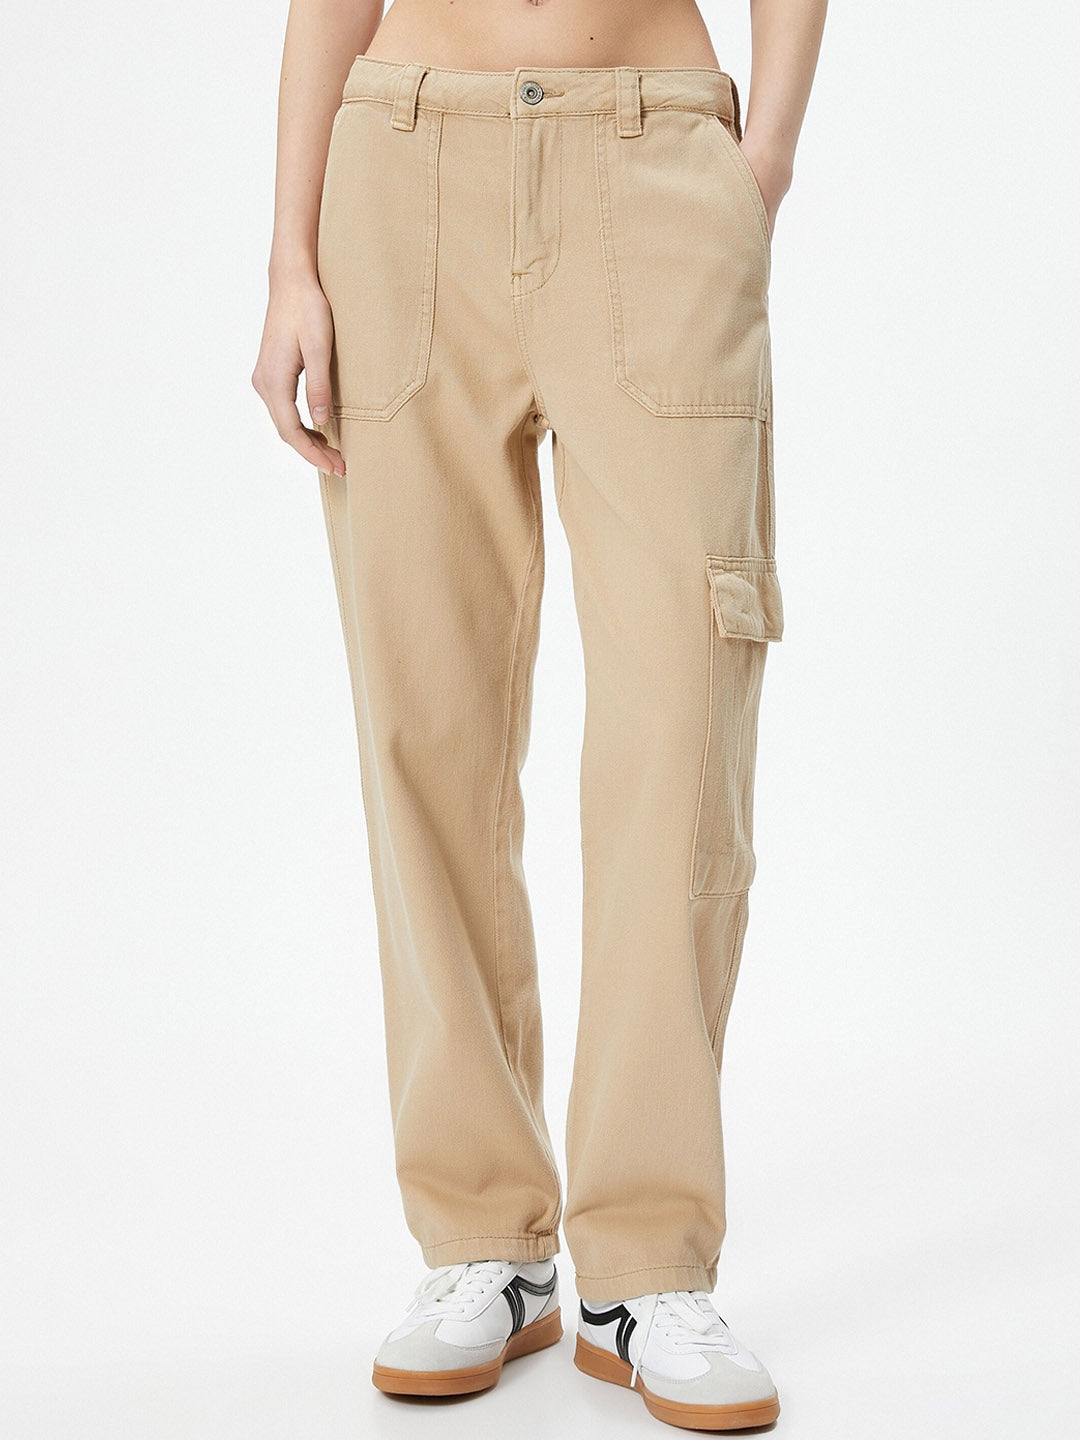 Classic Women's Cotton Blend Waist Jeggings Stretchy Skinny Pants Jeans  Leggings | eBay